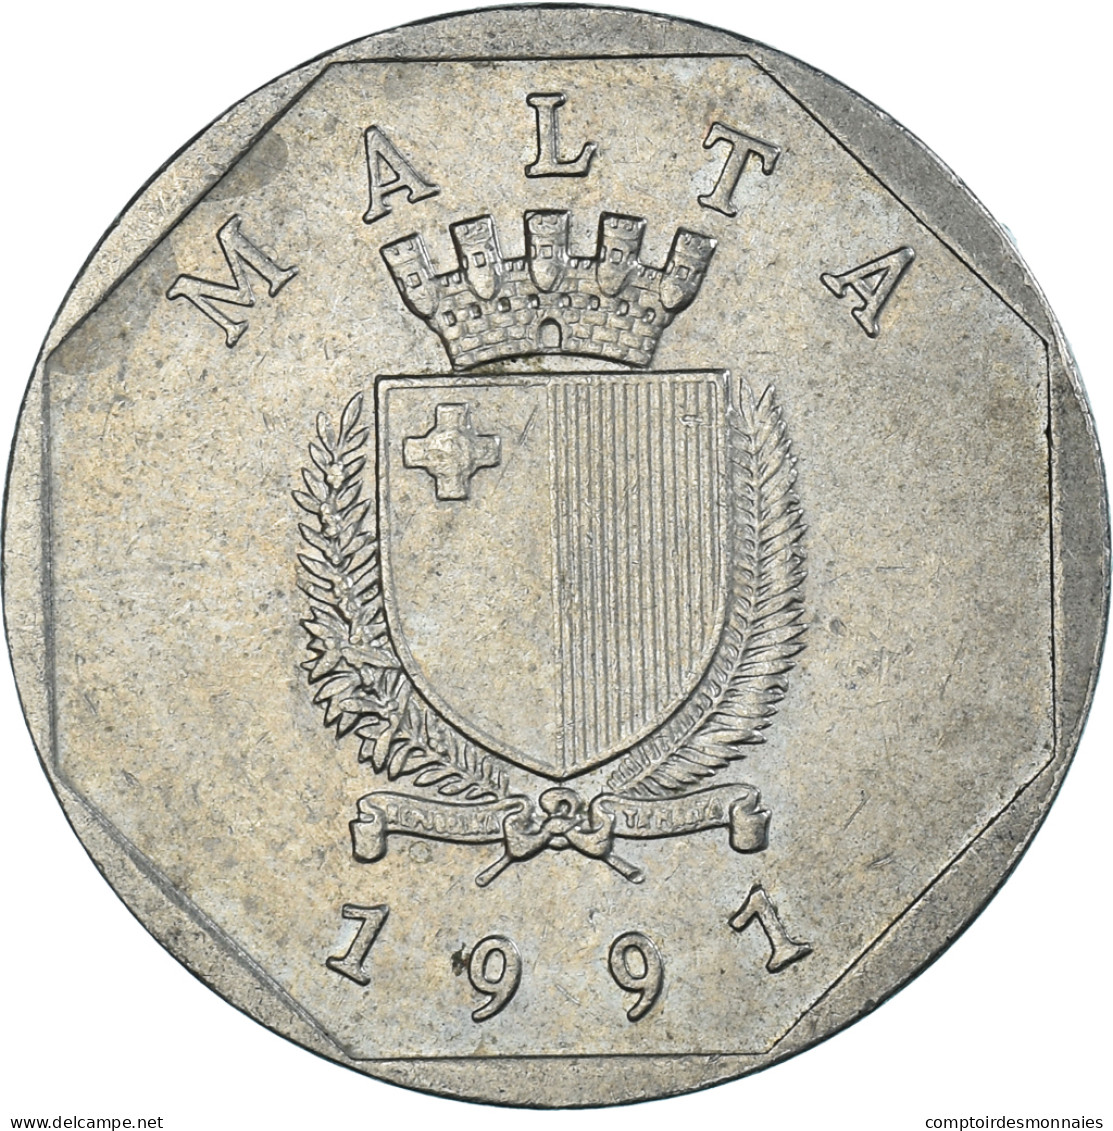 Monnaie, Malte, 50 Cents, 1991 - Malta